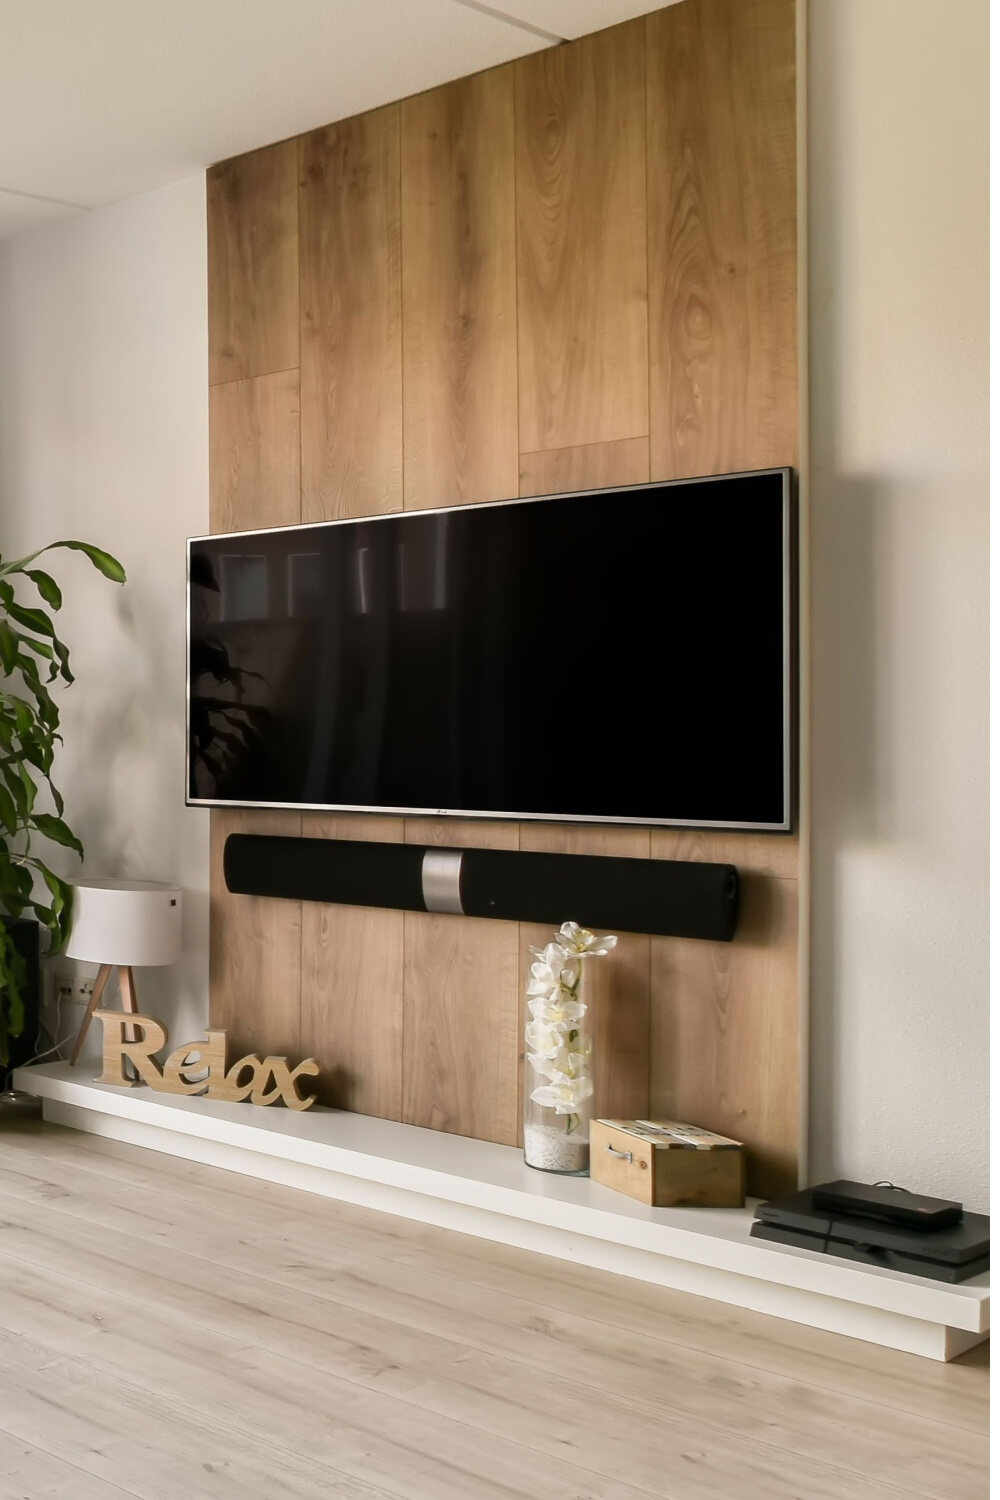 tv mounted on the wall above a soundbar and a shelf